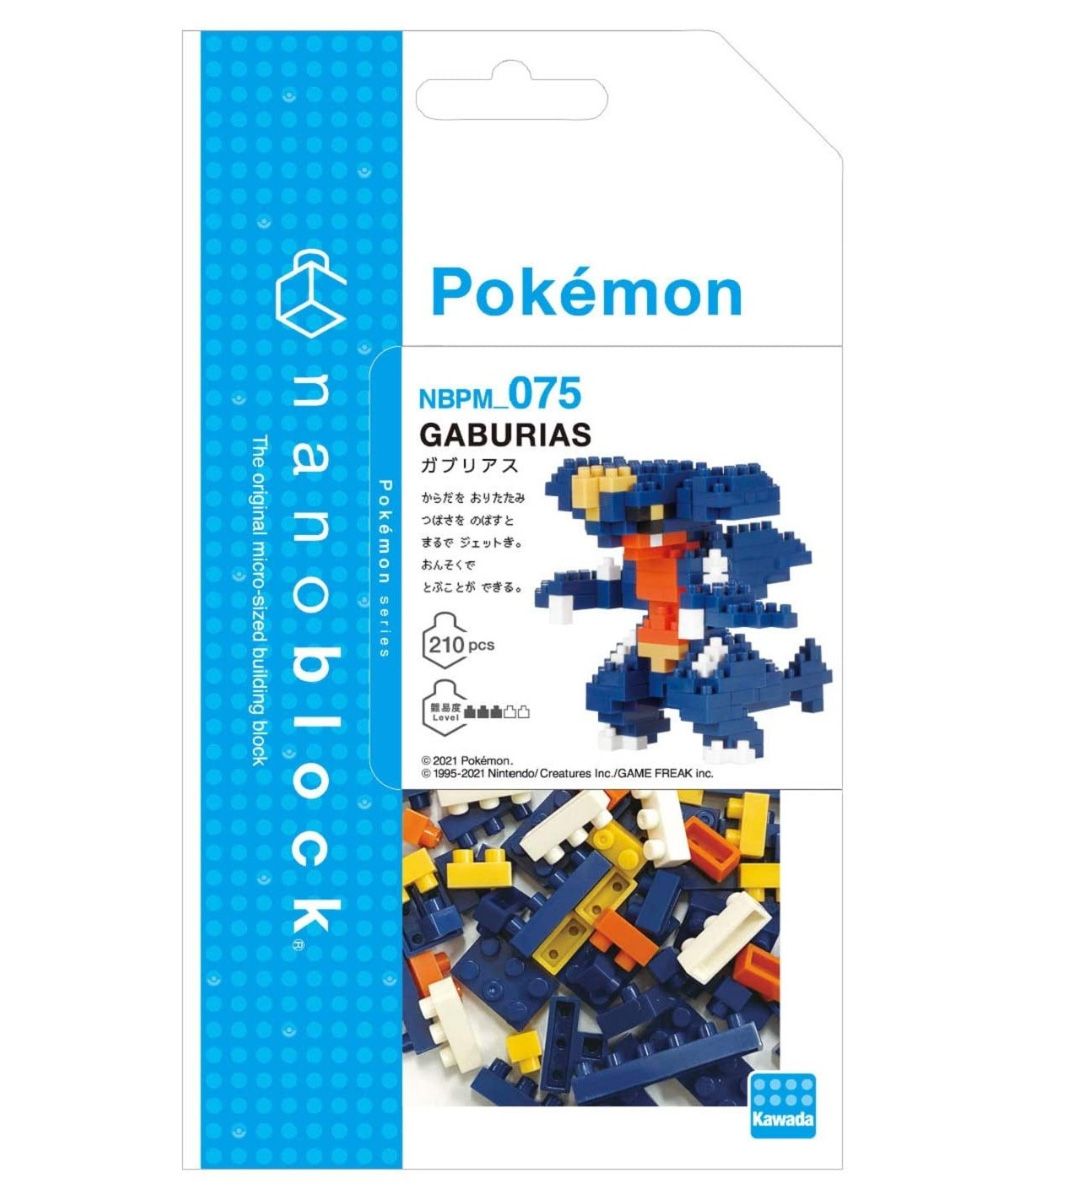 Pokémon x Nanoblock - Carchacrok - NBPM 075